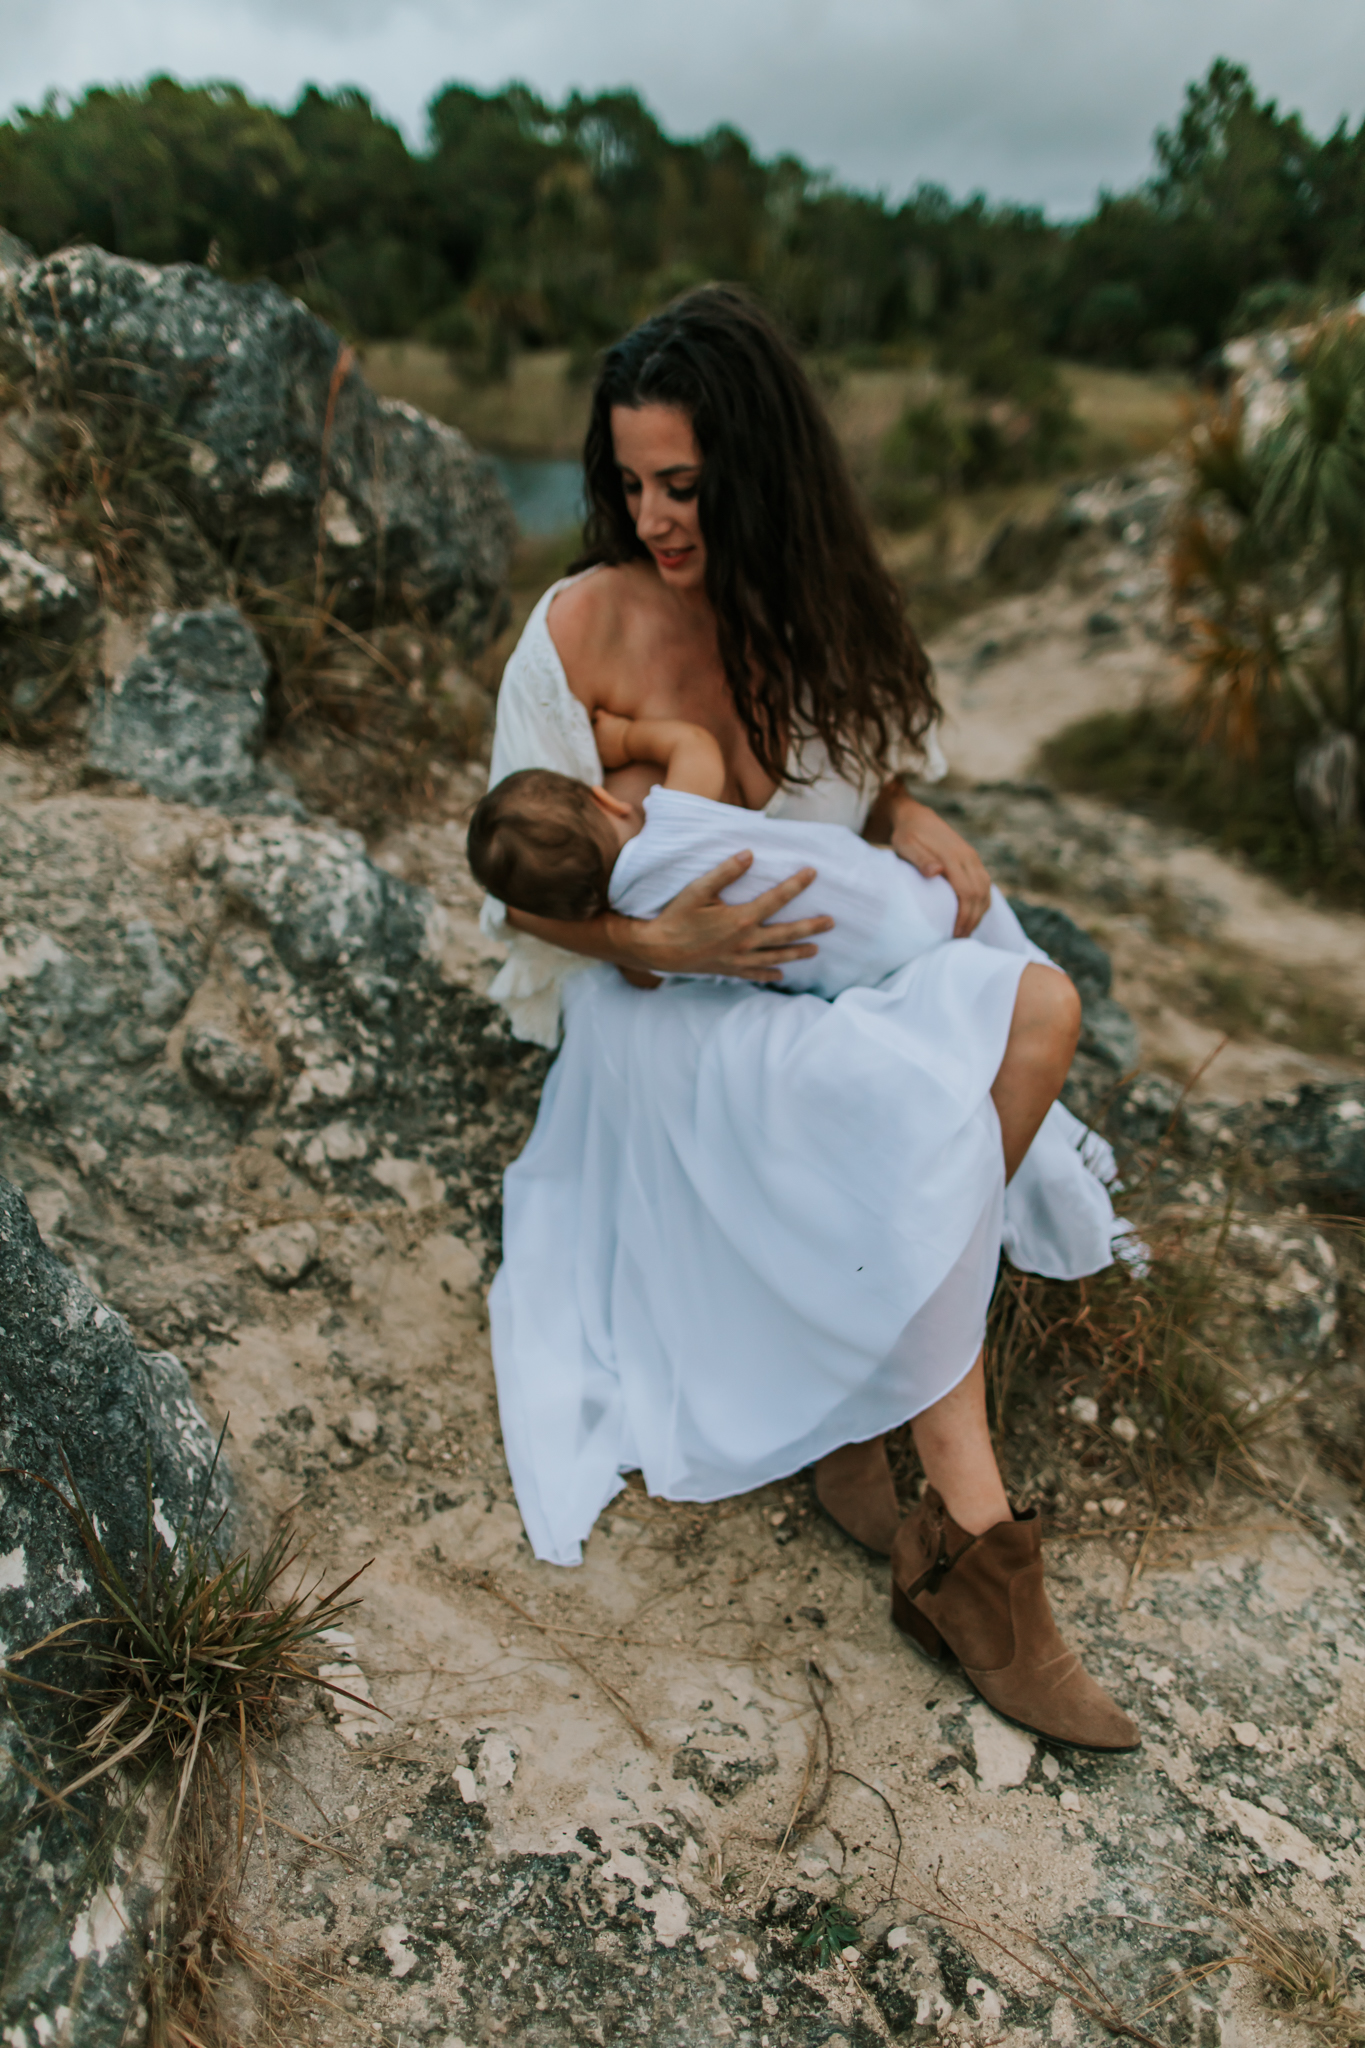 breastfeeding tips